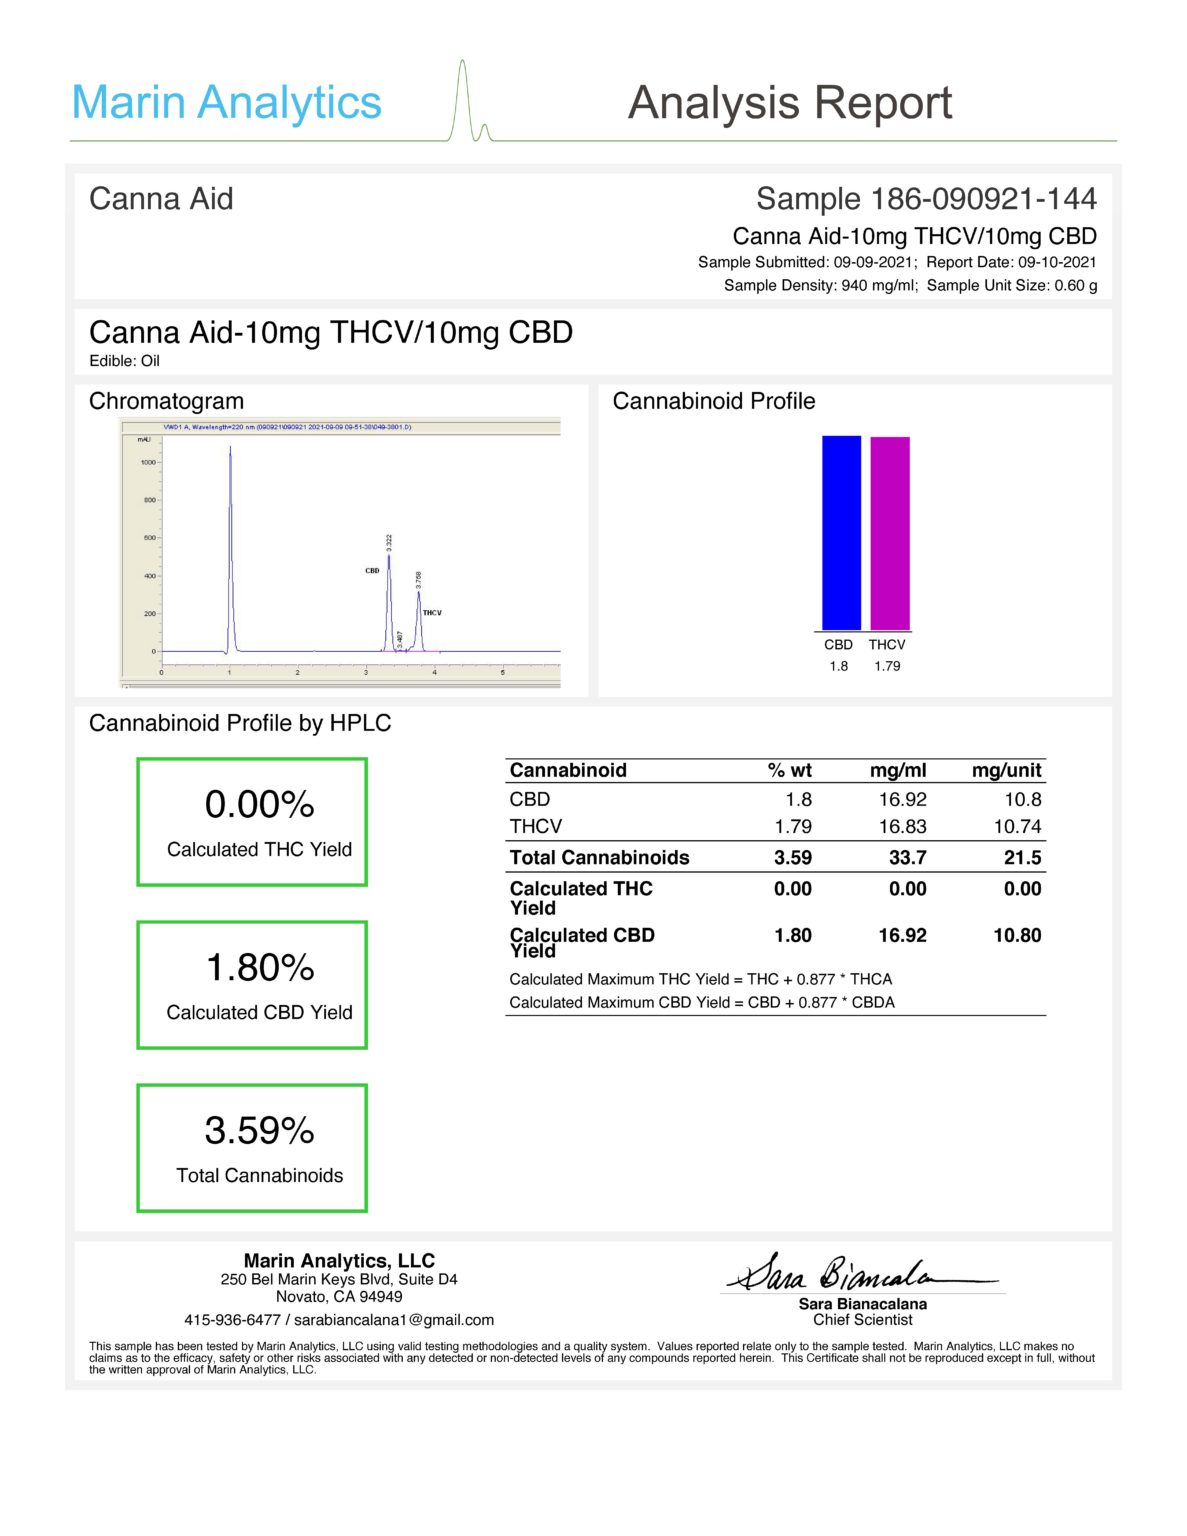 CannaAid 10mg THC +10mg CBD COA Report